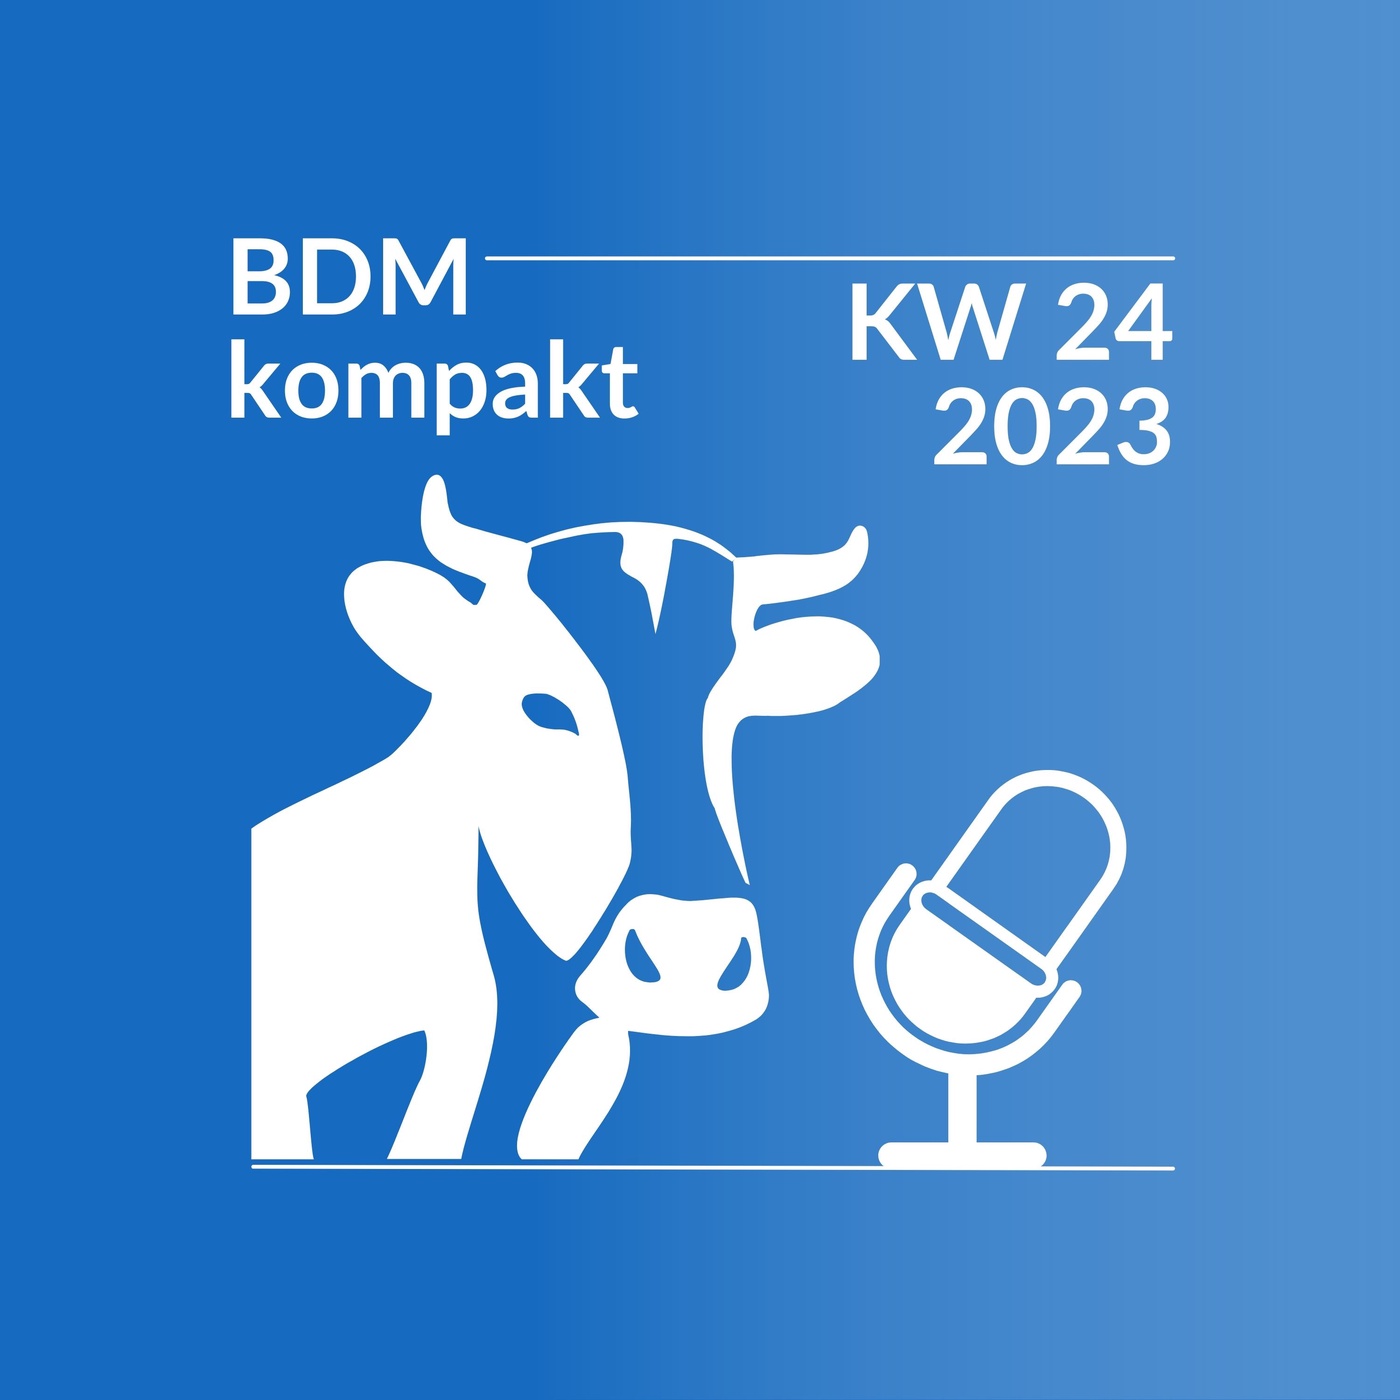 BDM kompakt KW 24/2023